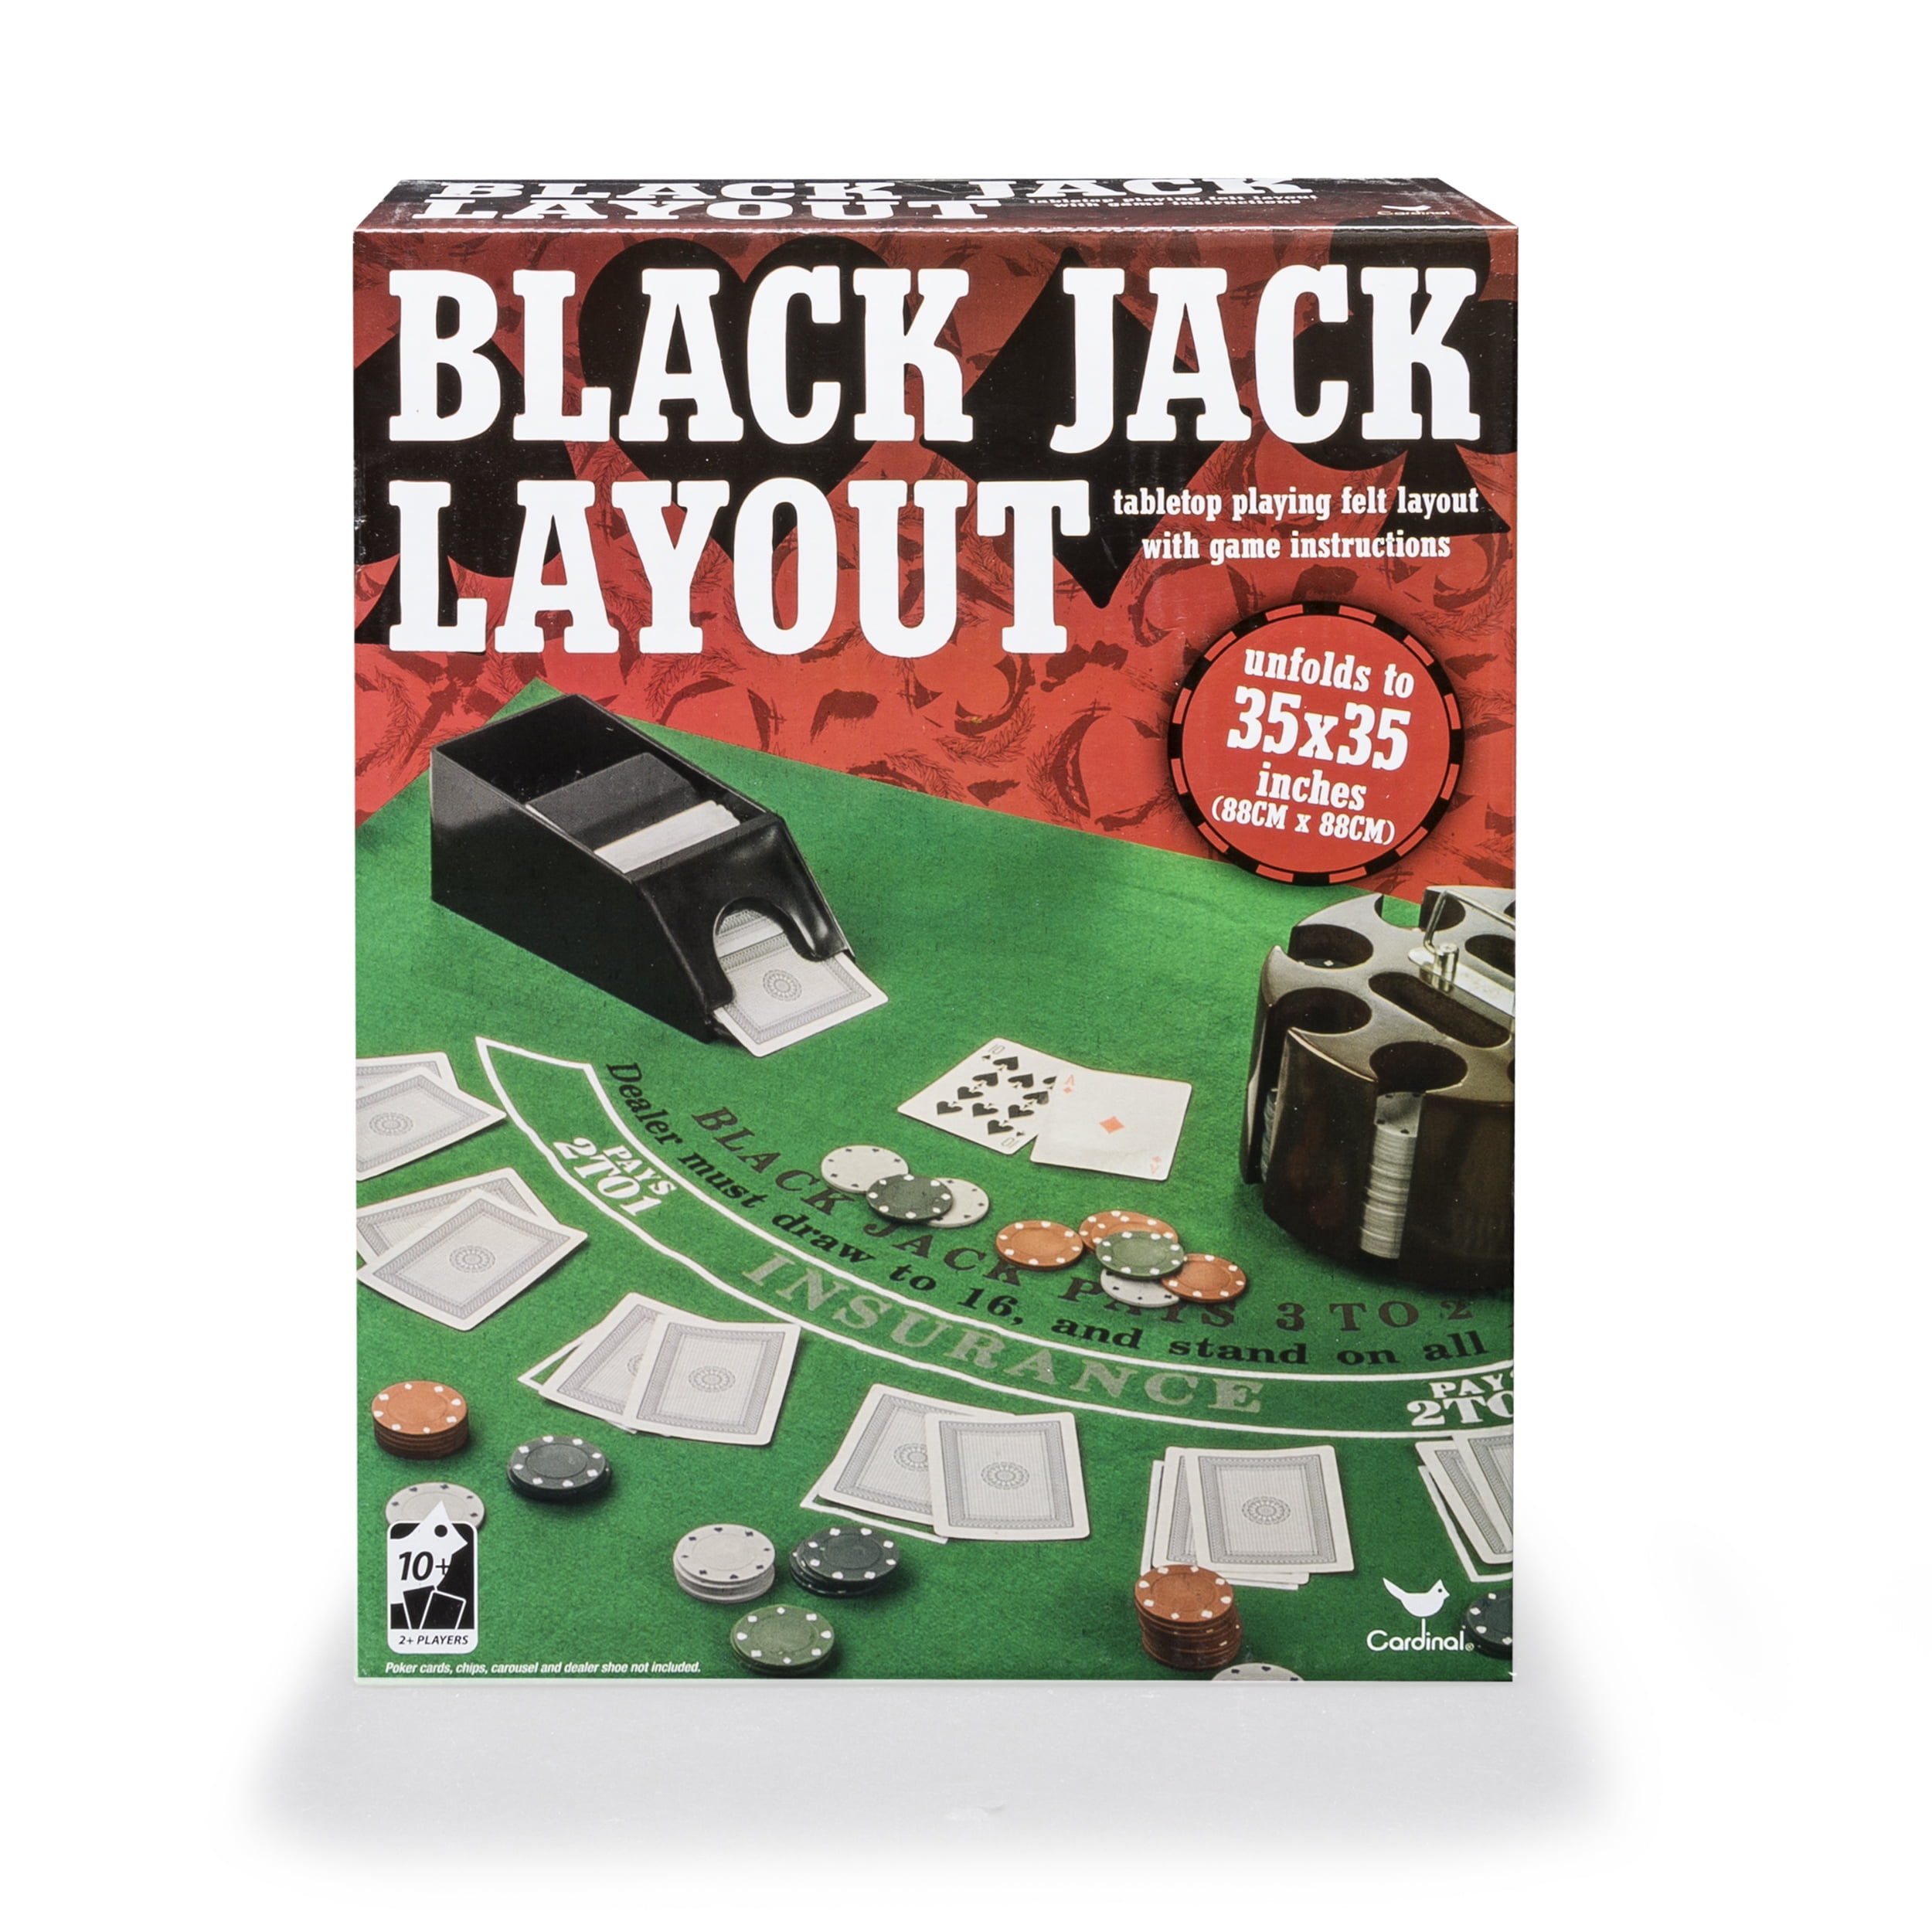 Blackjack 24"x 36" Layout Table Top Green Mat Portable Cover Felt Holdem Poker 